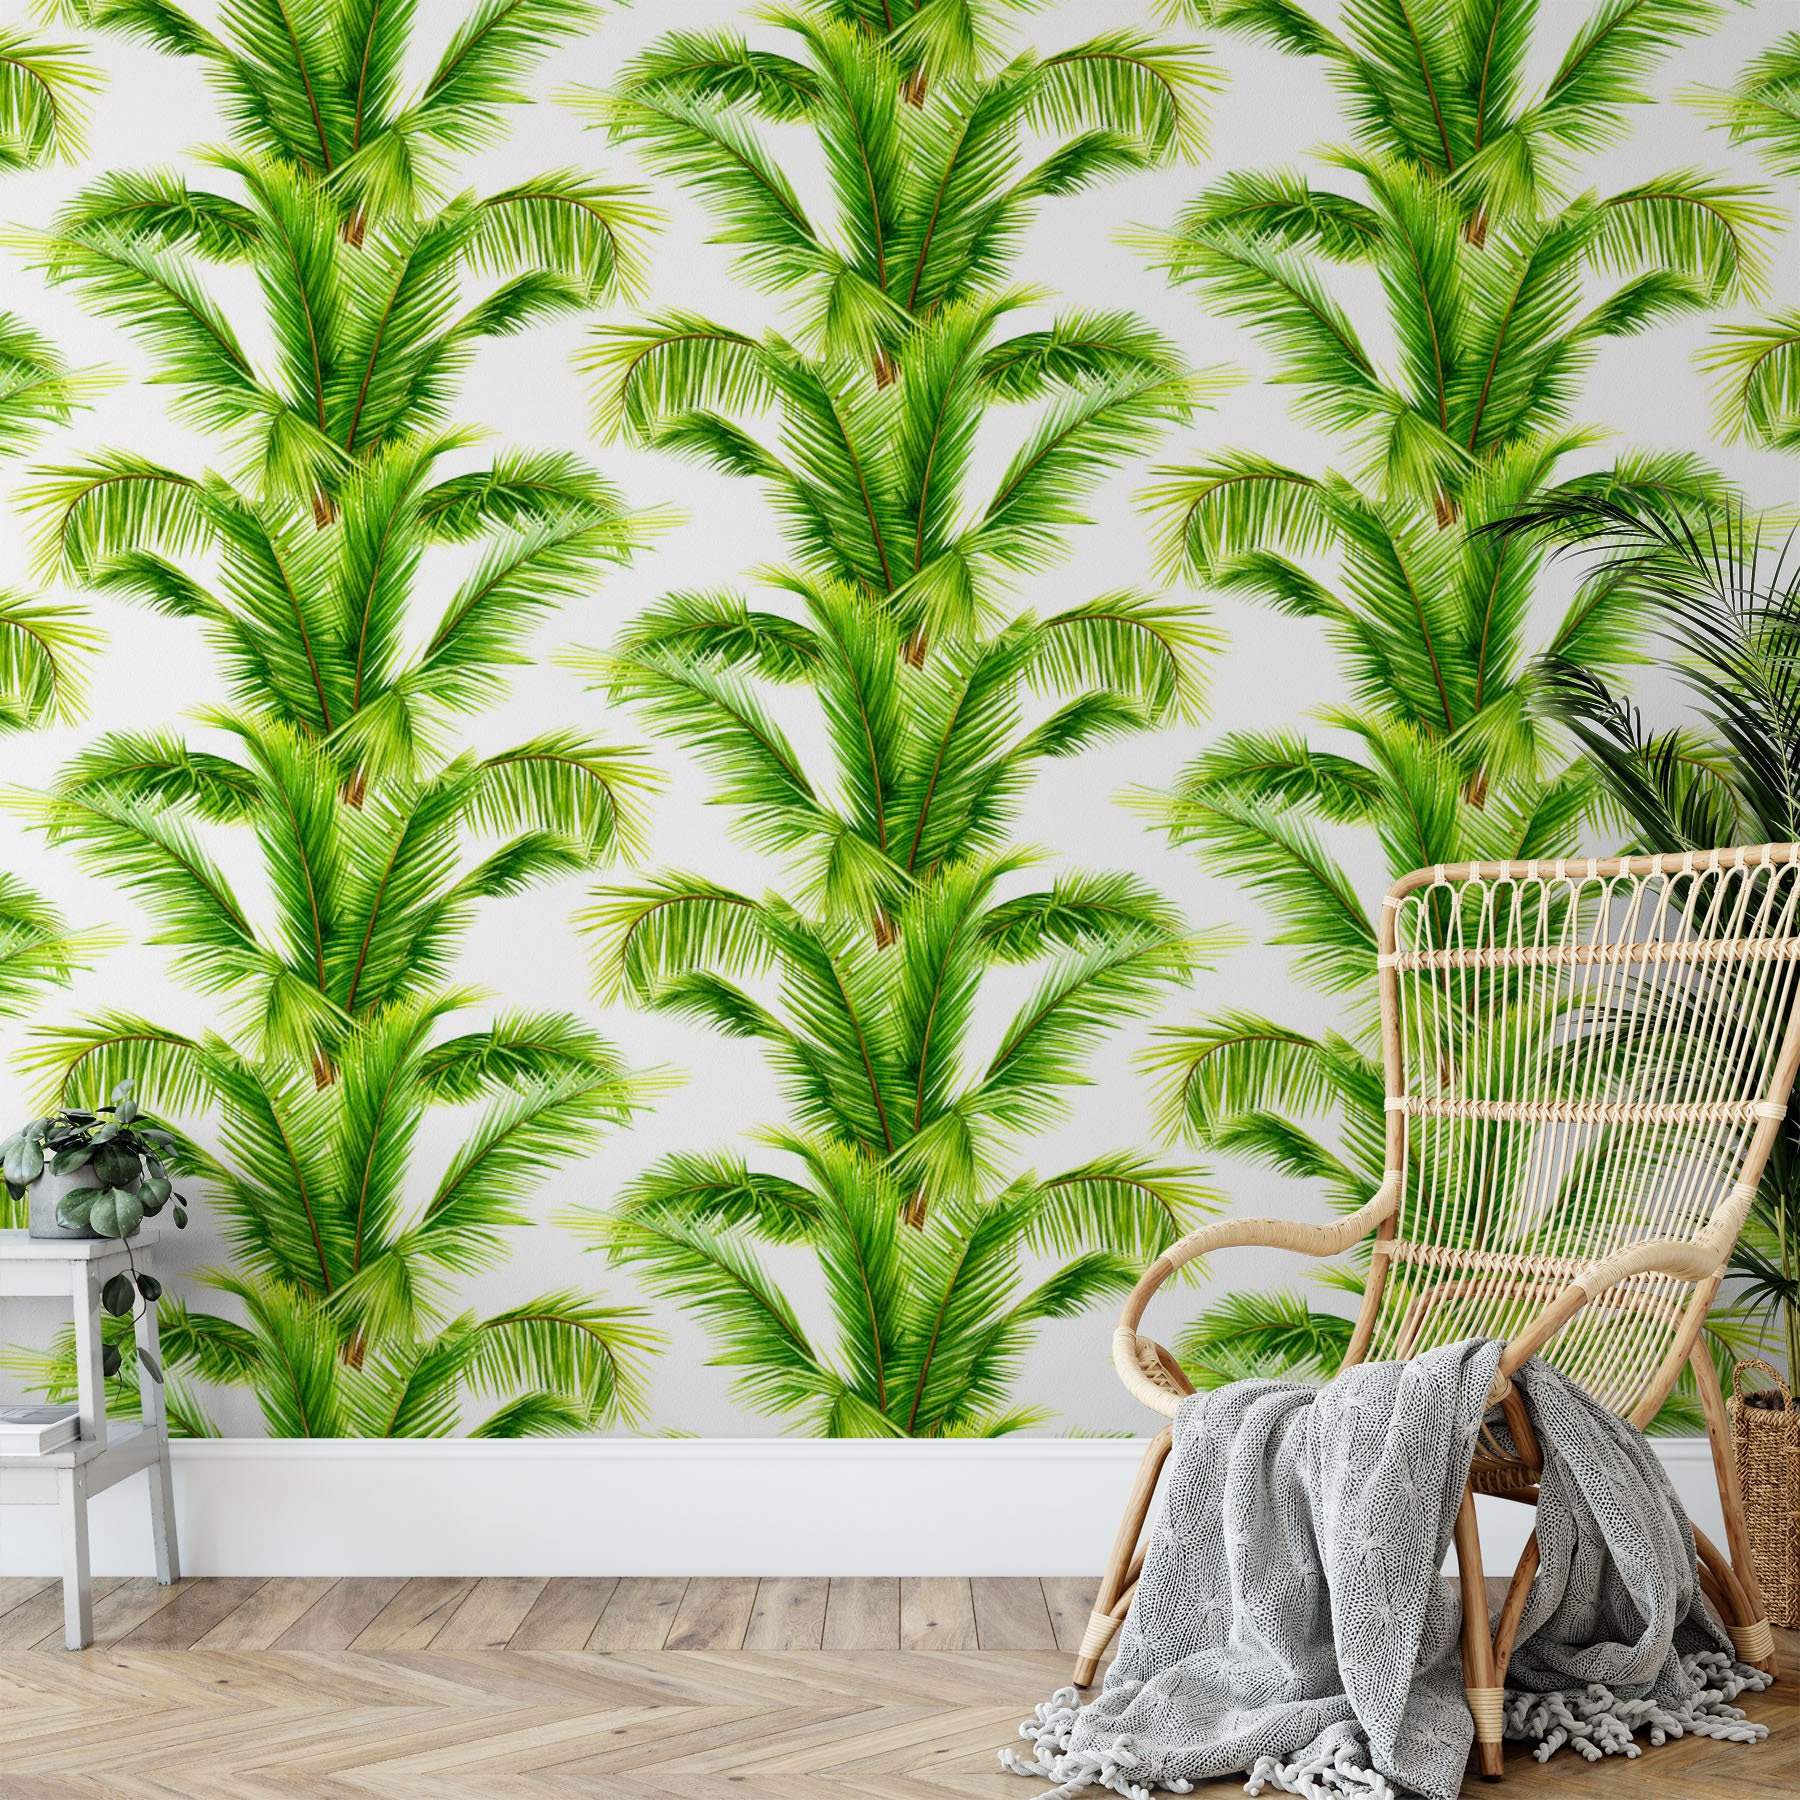 Tropical Removable Wallpaper. Palm leaves Wallpaper. Modern | Etsy